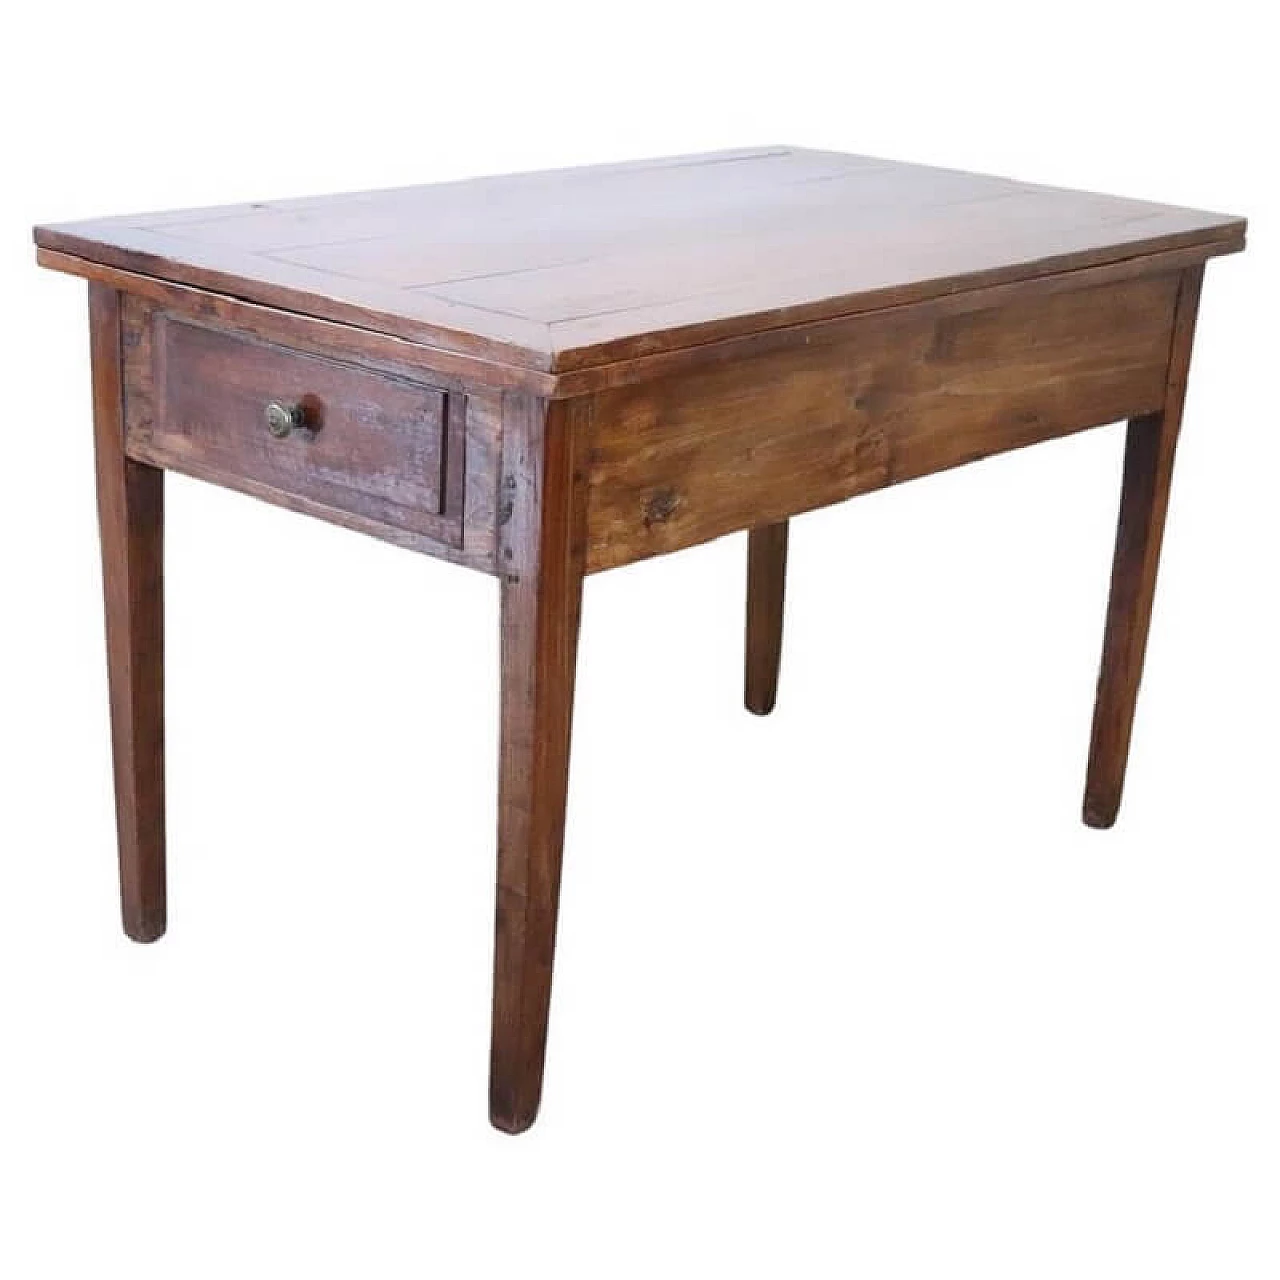 Poplar and cherry wood folding table, 19th century 1